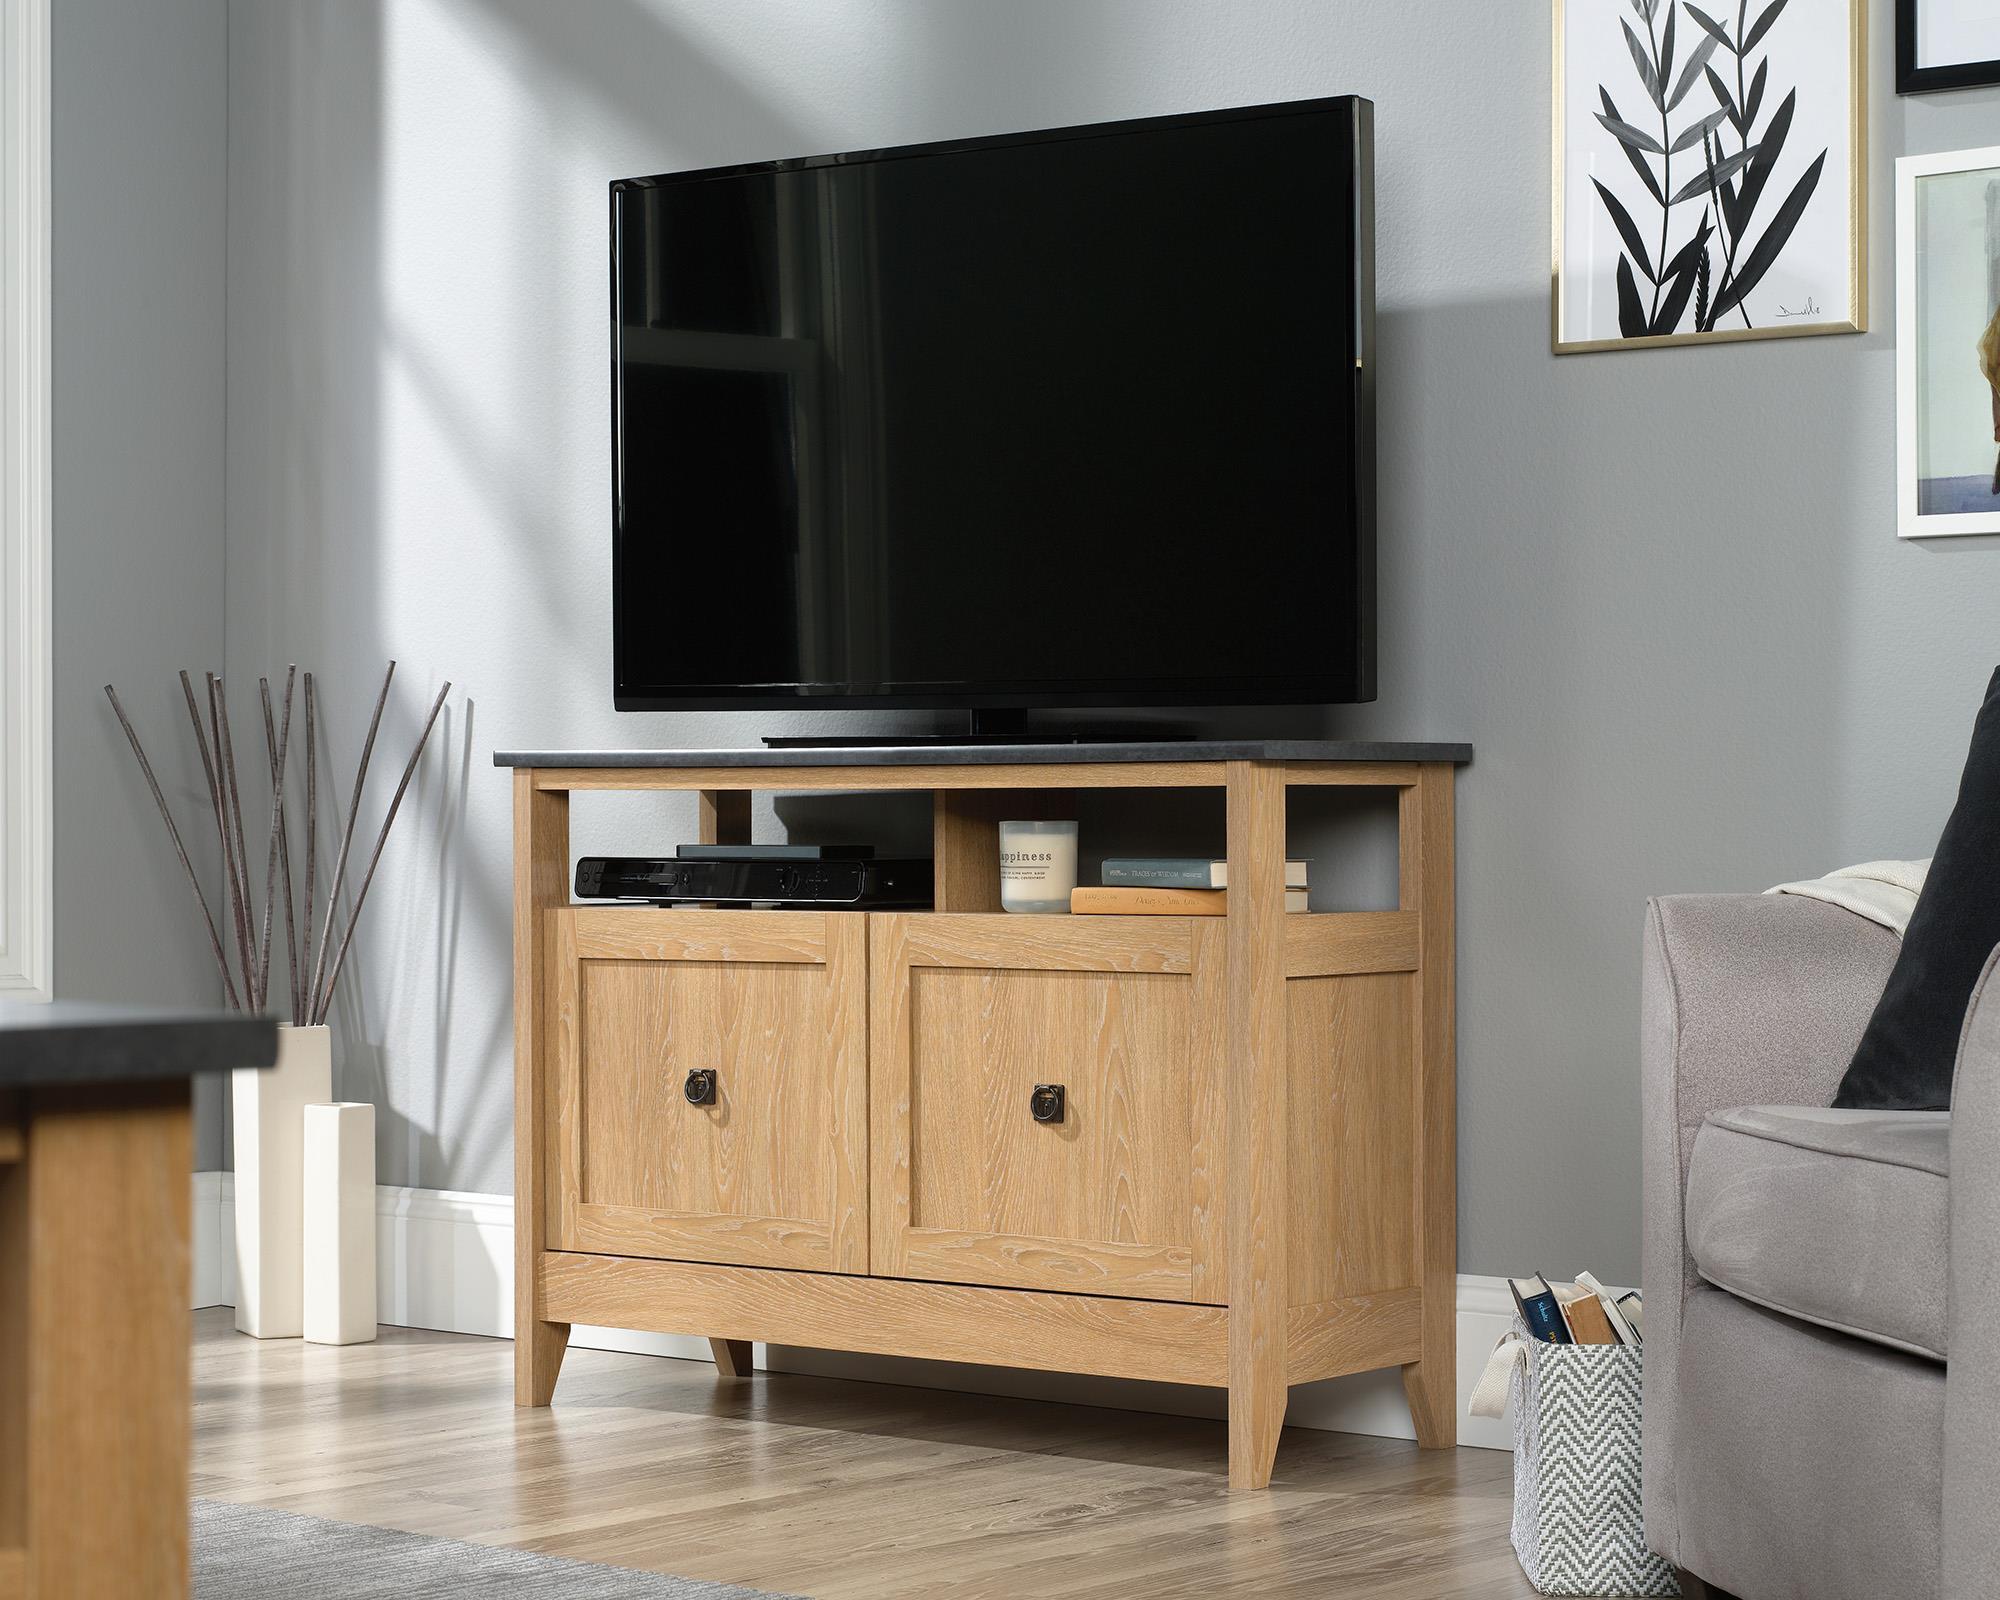 Home study tv stand - sideboard - crimblefest furniture - image 1